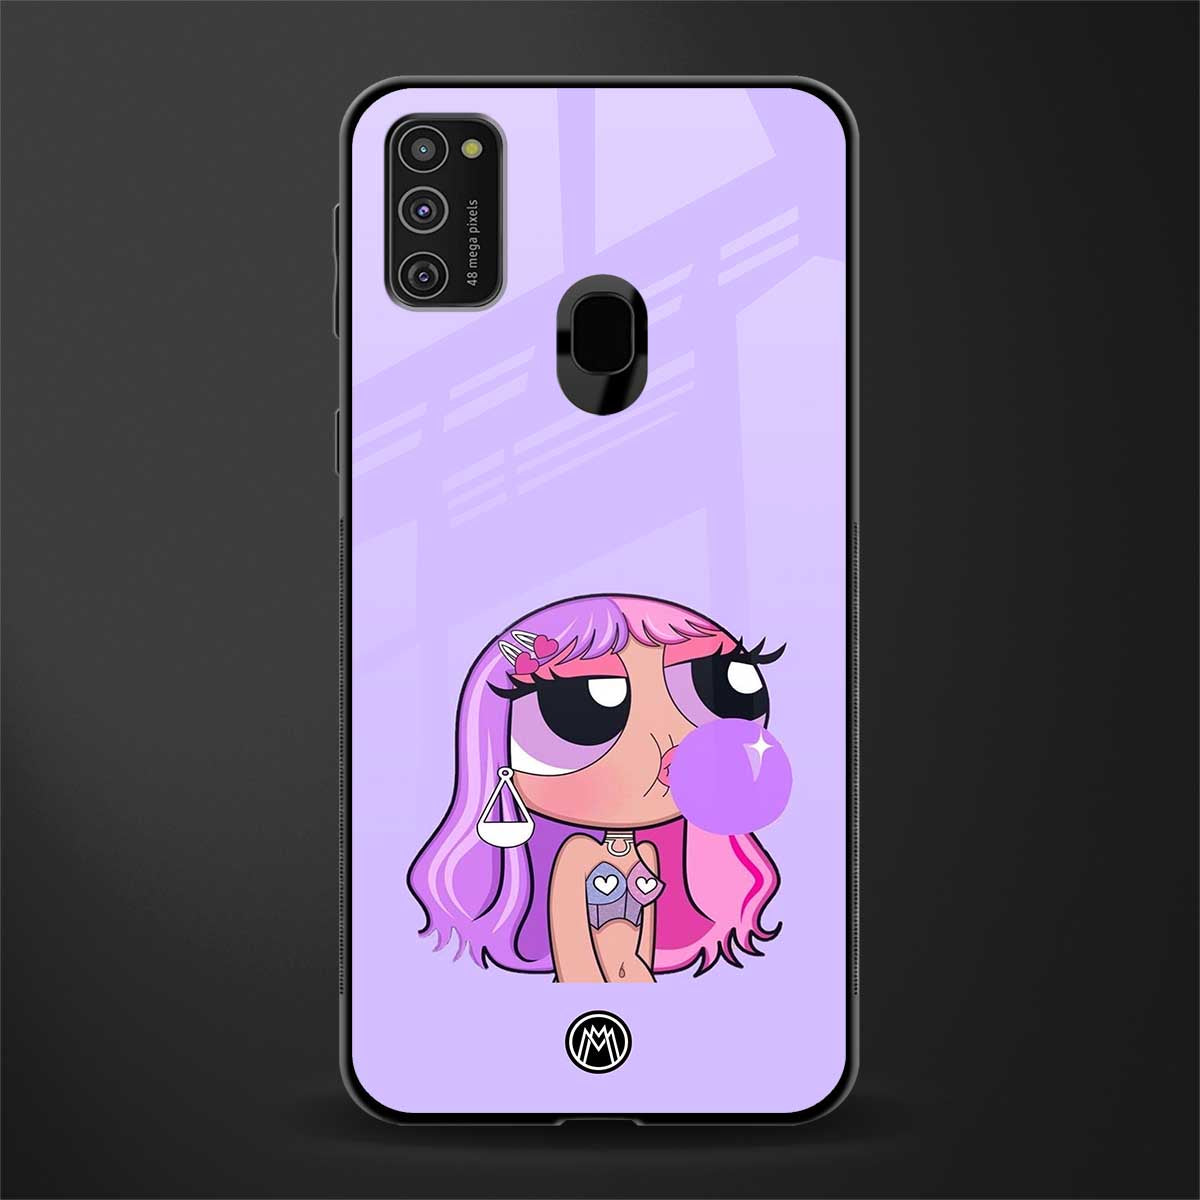 purple chic powerpuff girls glass case for samsung galaxy m30s image